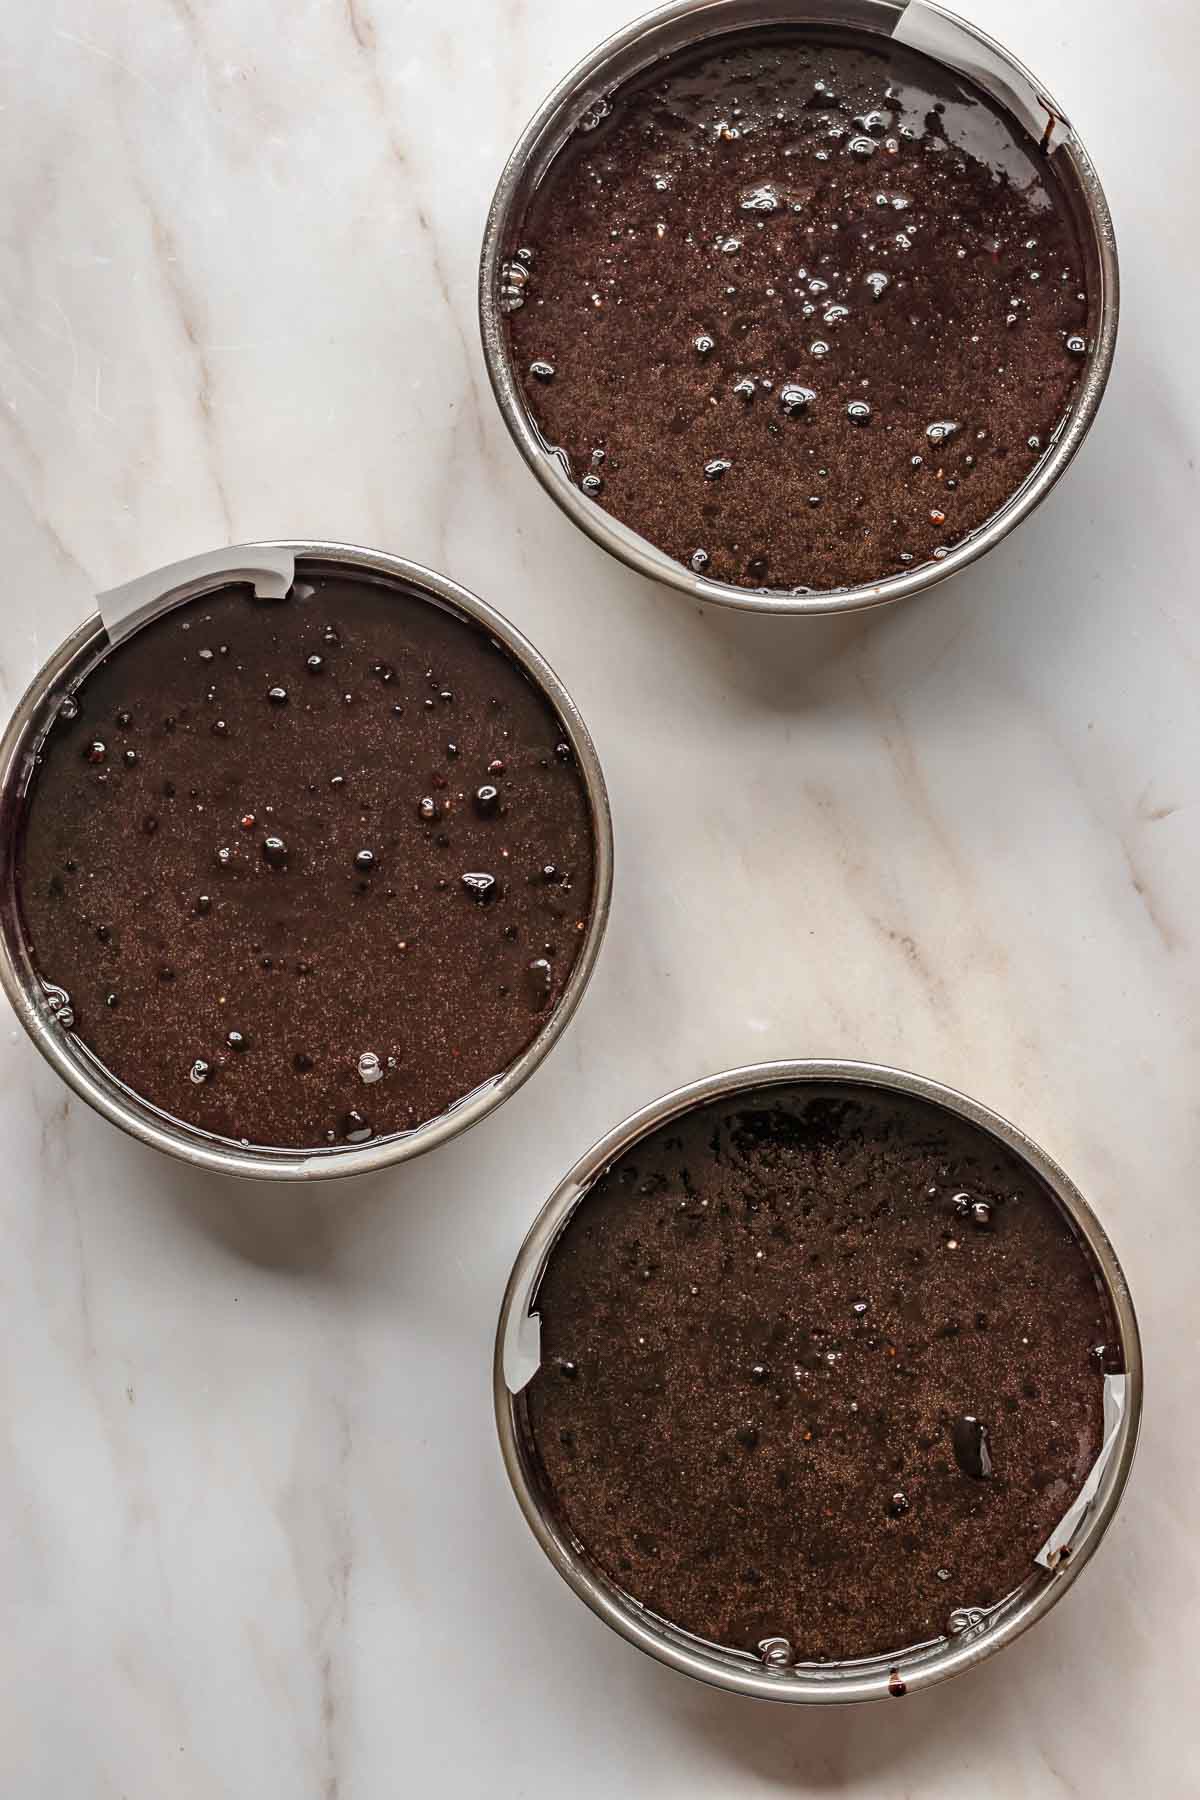 Chocolate cake batter in three cake pans.